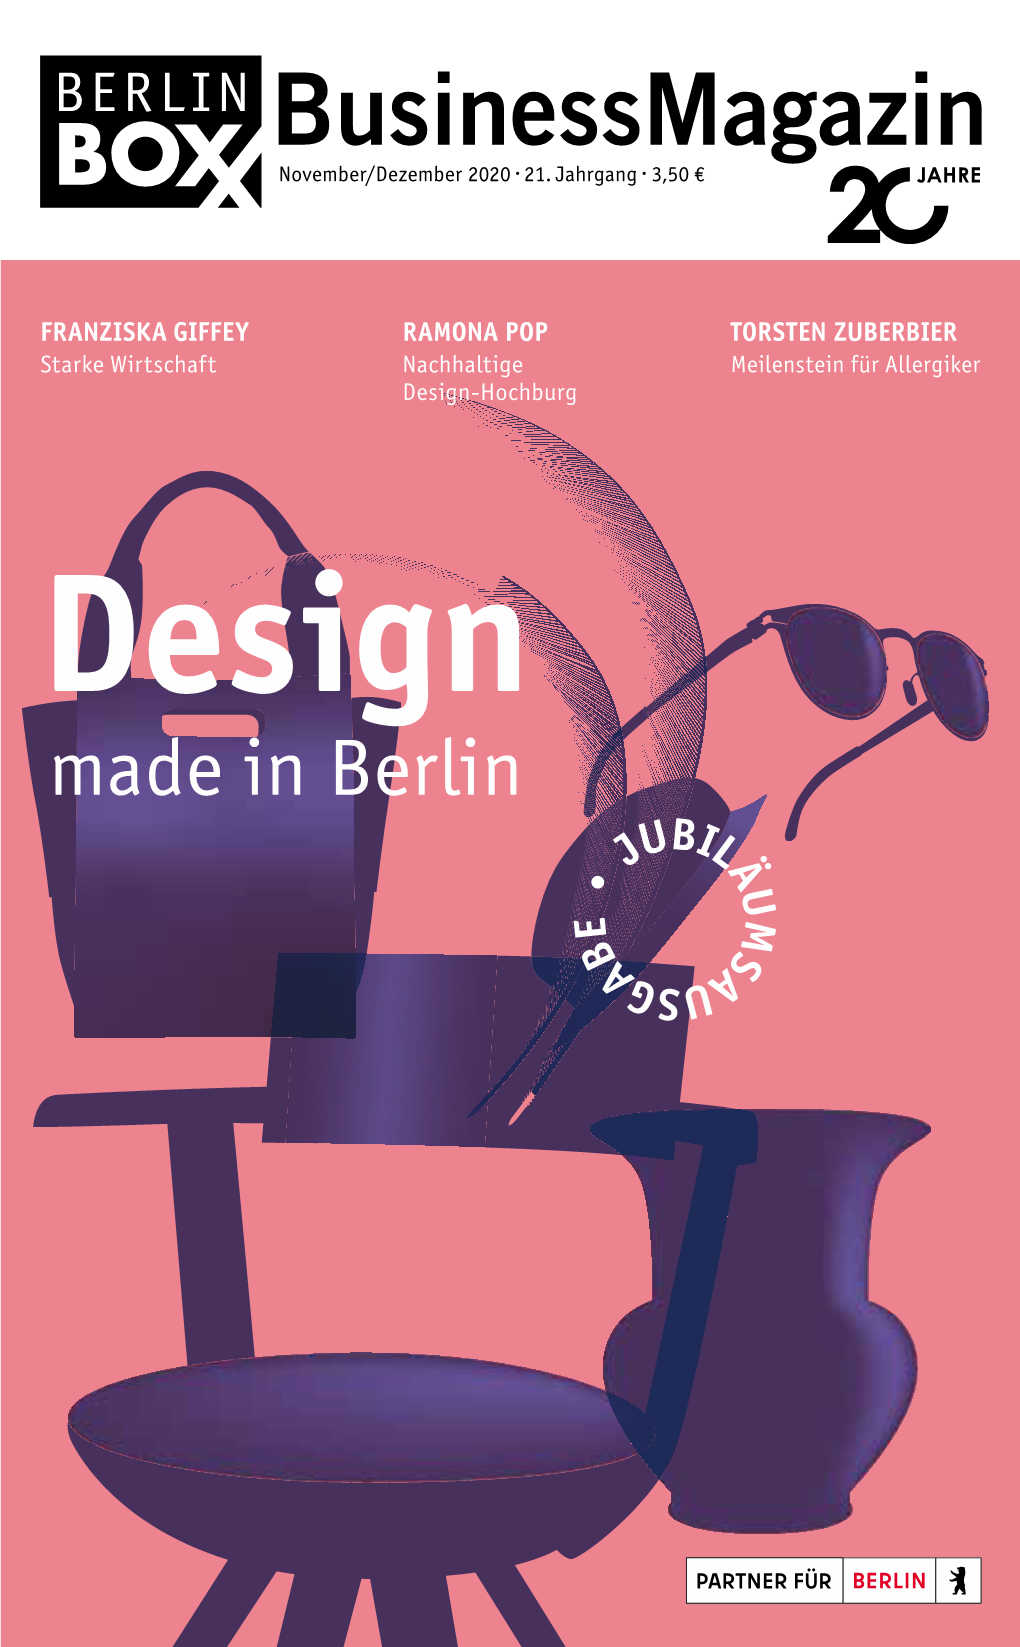 Design-Hochburg Businessmagazin Berlinboxx Design Made in Berlin BI JU LÄ